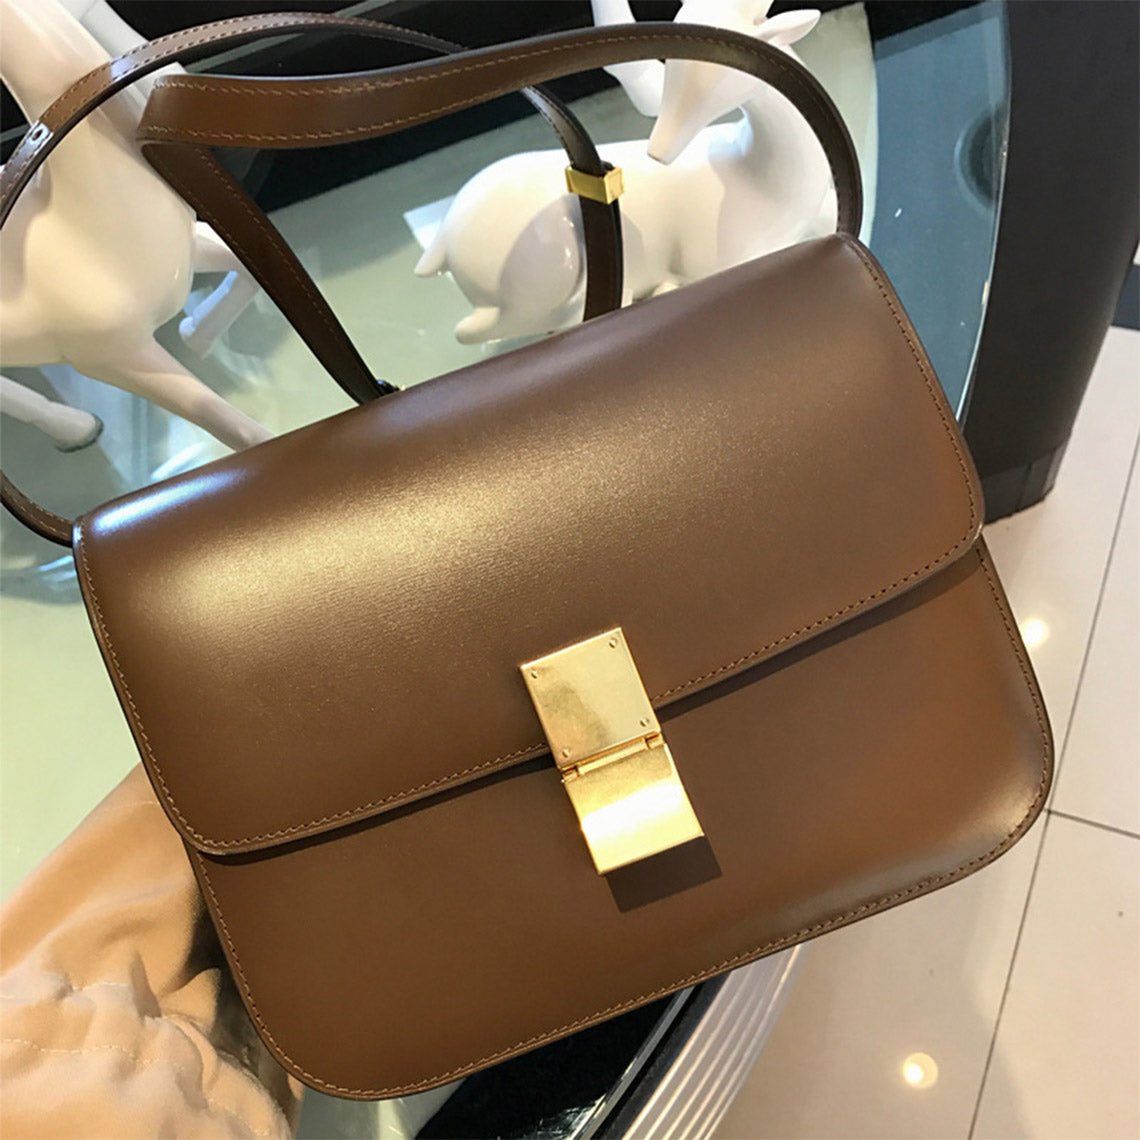 Leather Inspired Tofu Box Bag